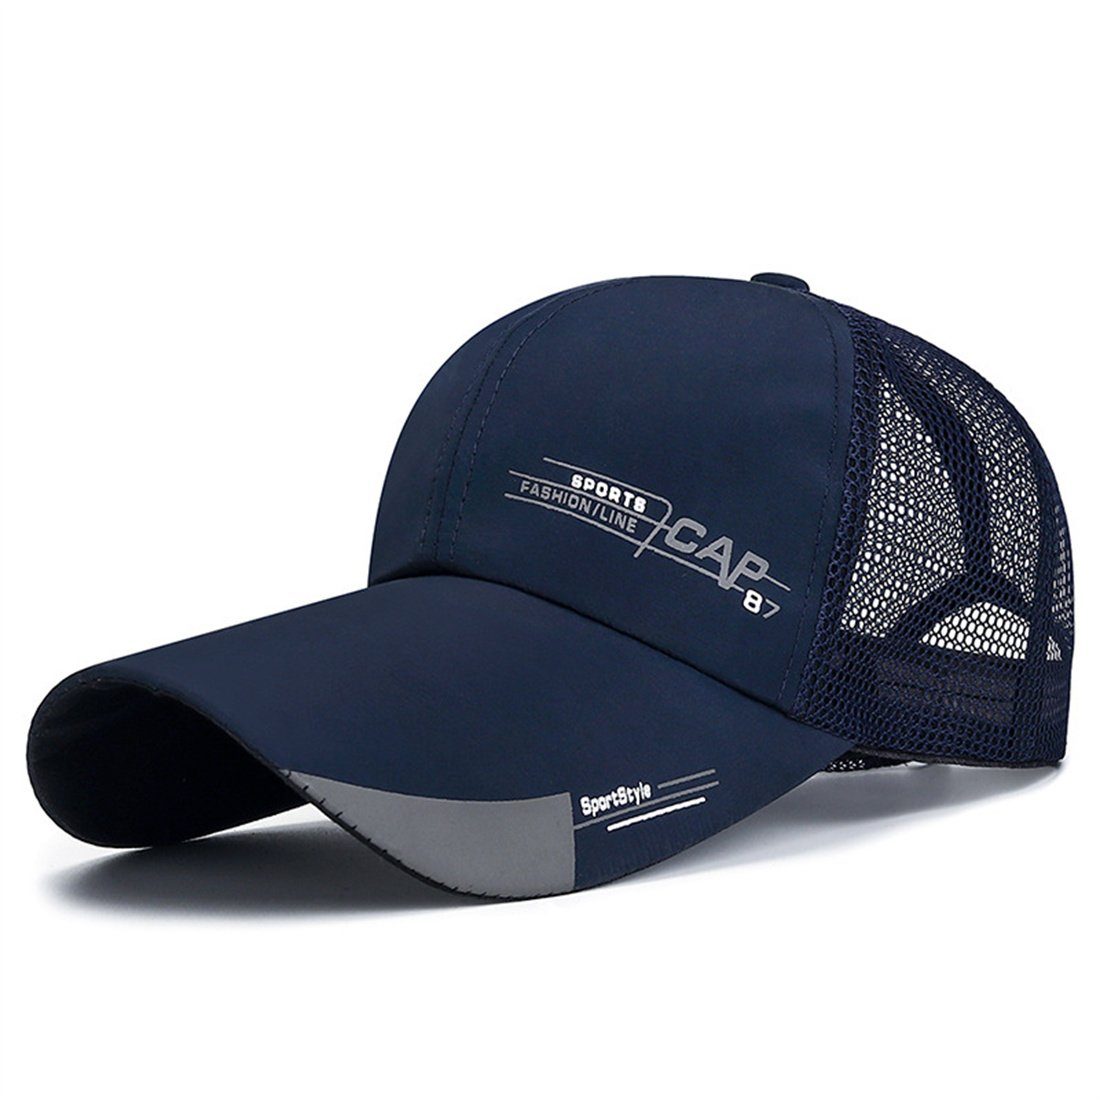 DÖRÖY Baseball Cap Sonnenschutz-Baseballkappe für Männer, Mesh-Kappe mit Entenzunge blau